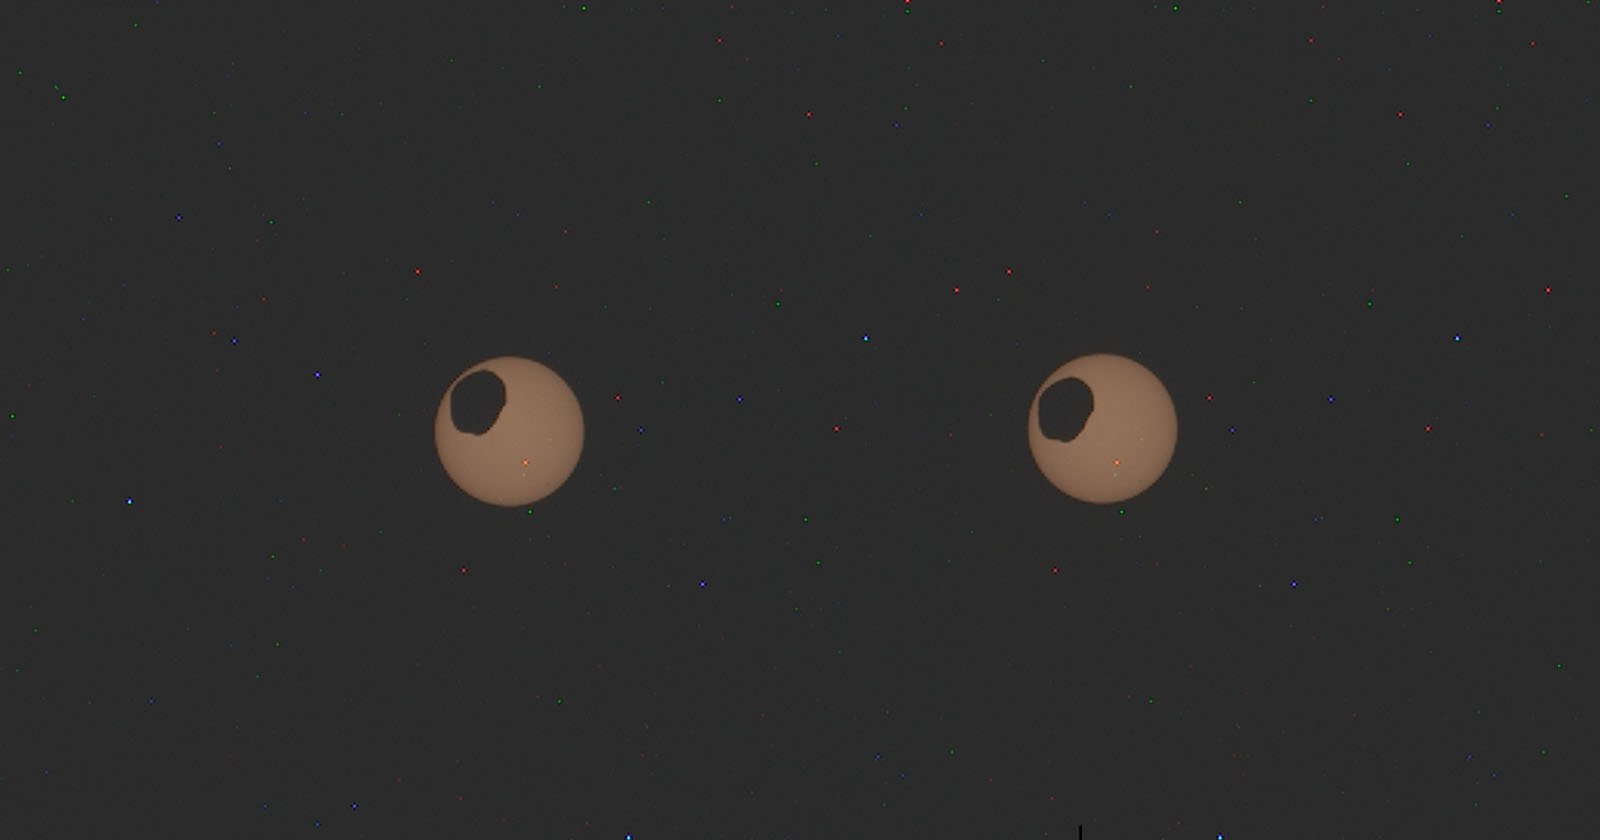  nasa captures martian eclipse looks like pair 